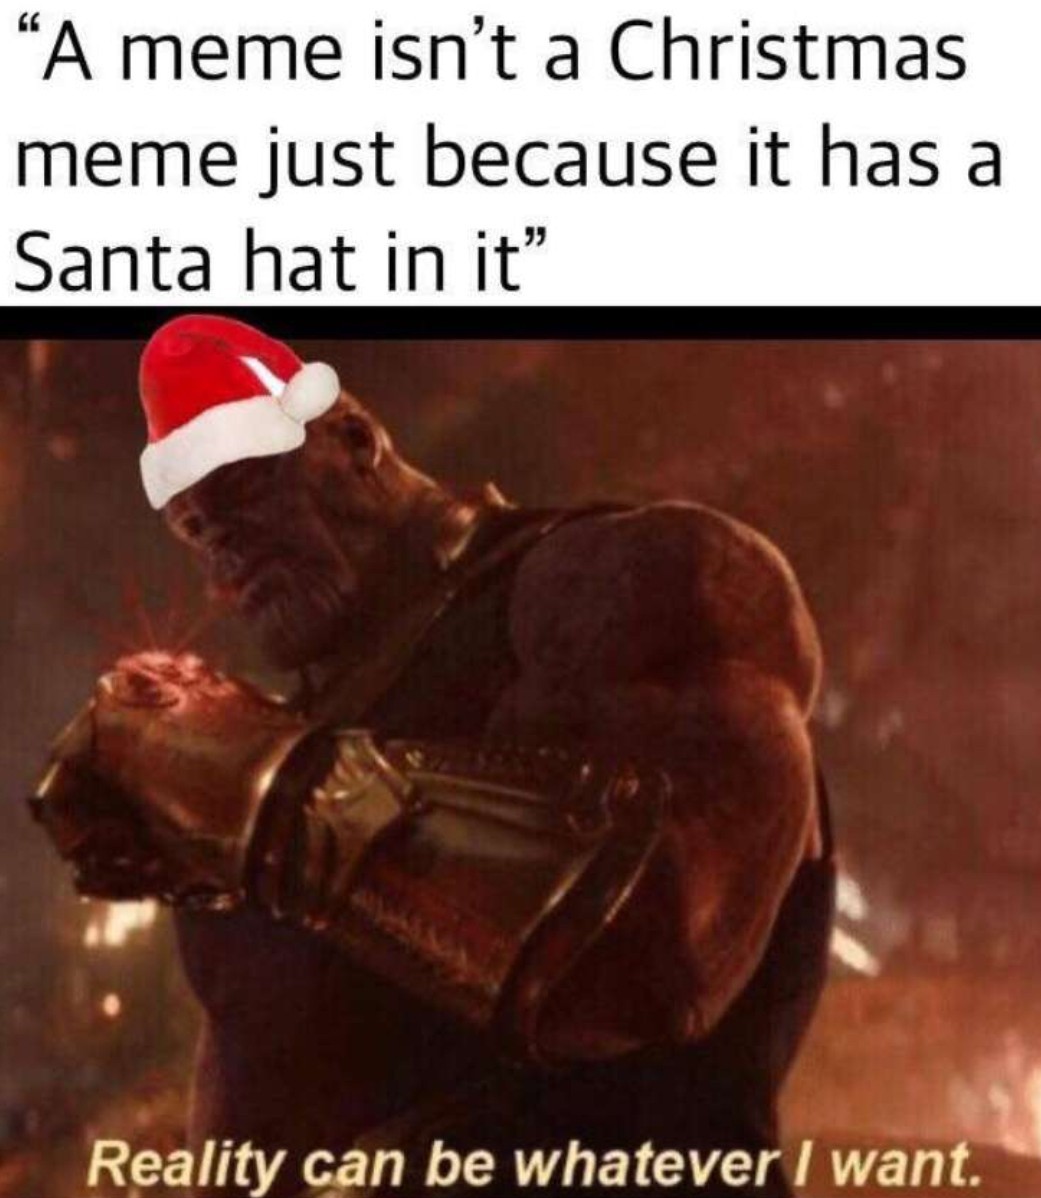 Christmas is legot a hoax, Jesus wasn't even born kn the 25th - meme